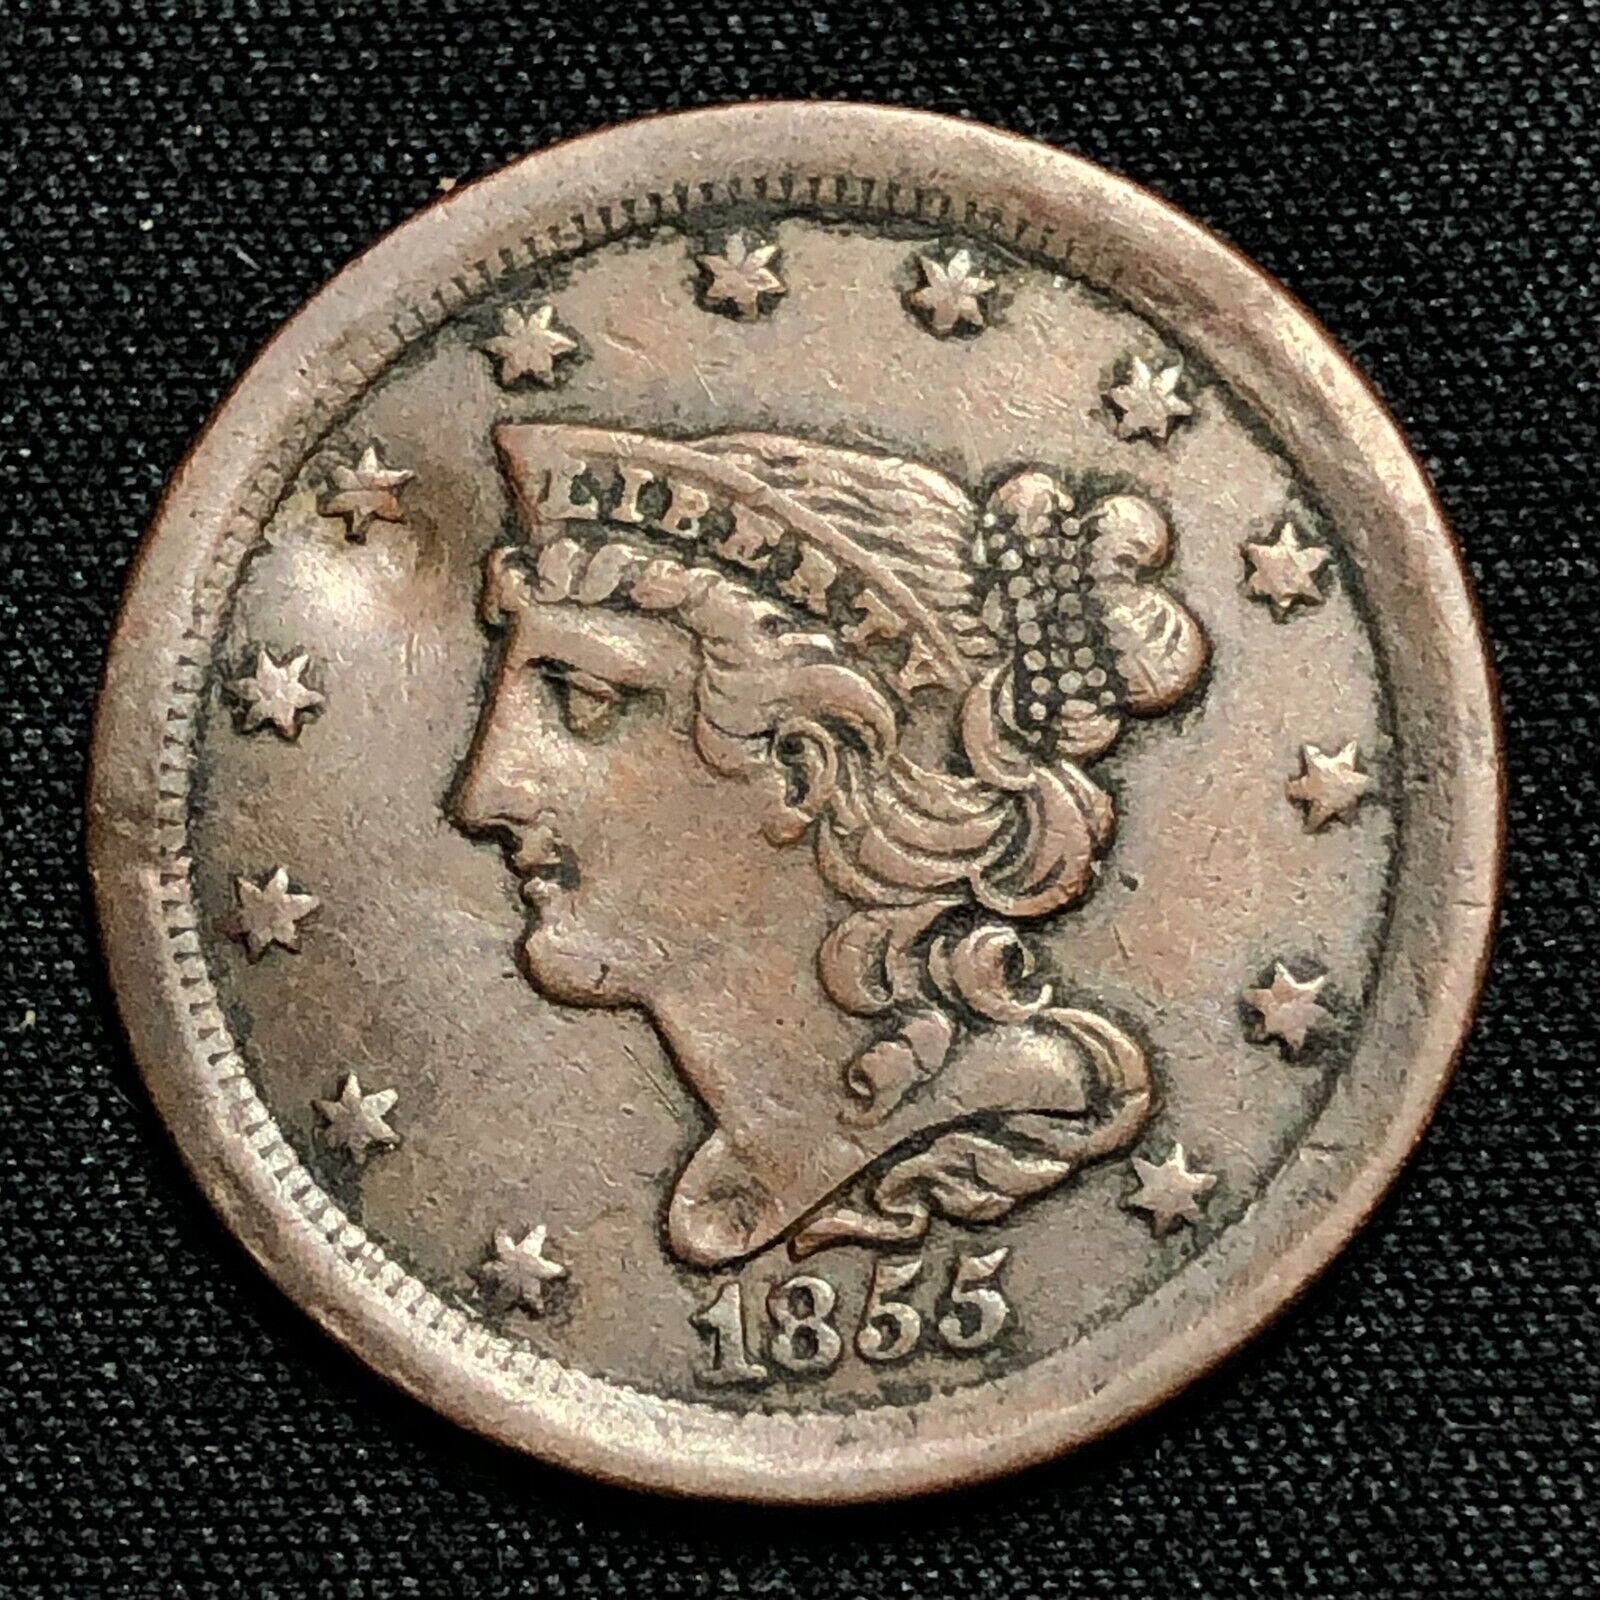 1855 Braided Hair Half Cent Philadelphia Mint Very Fine Condition Damaged